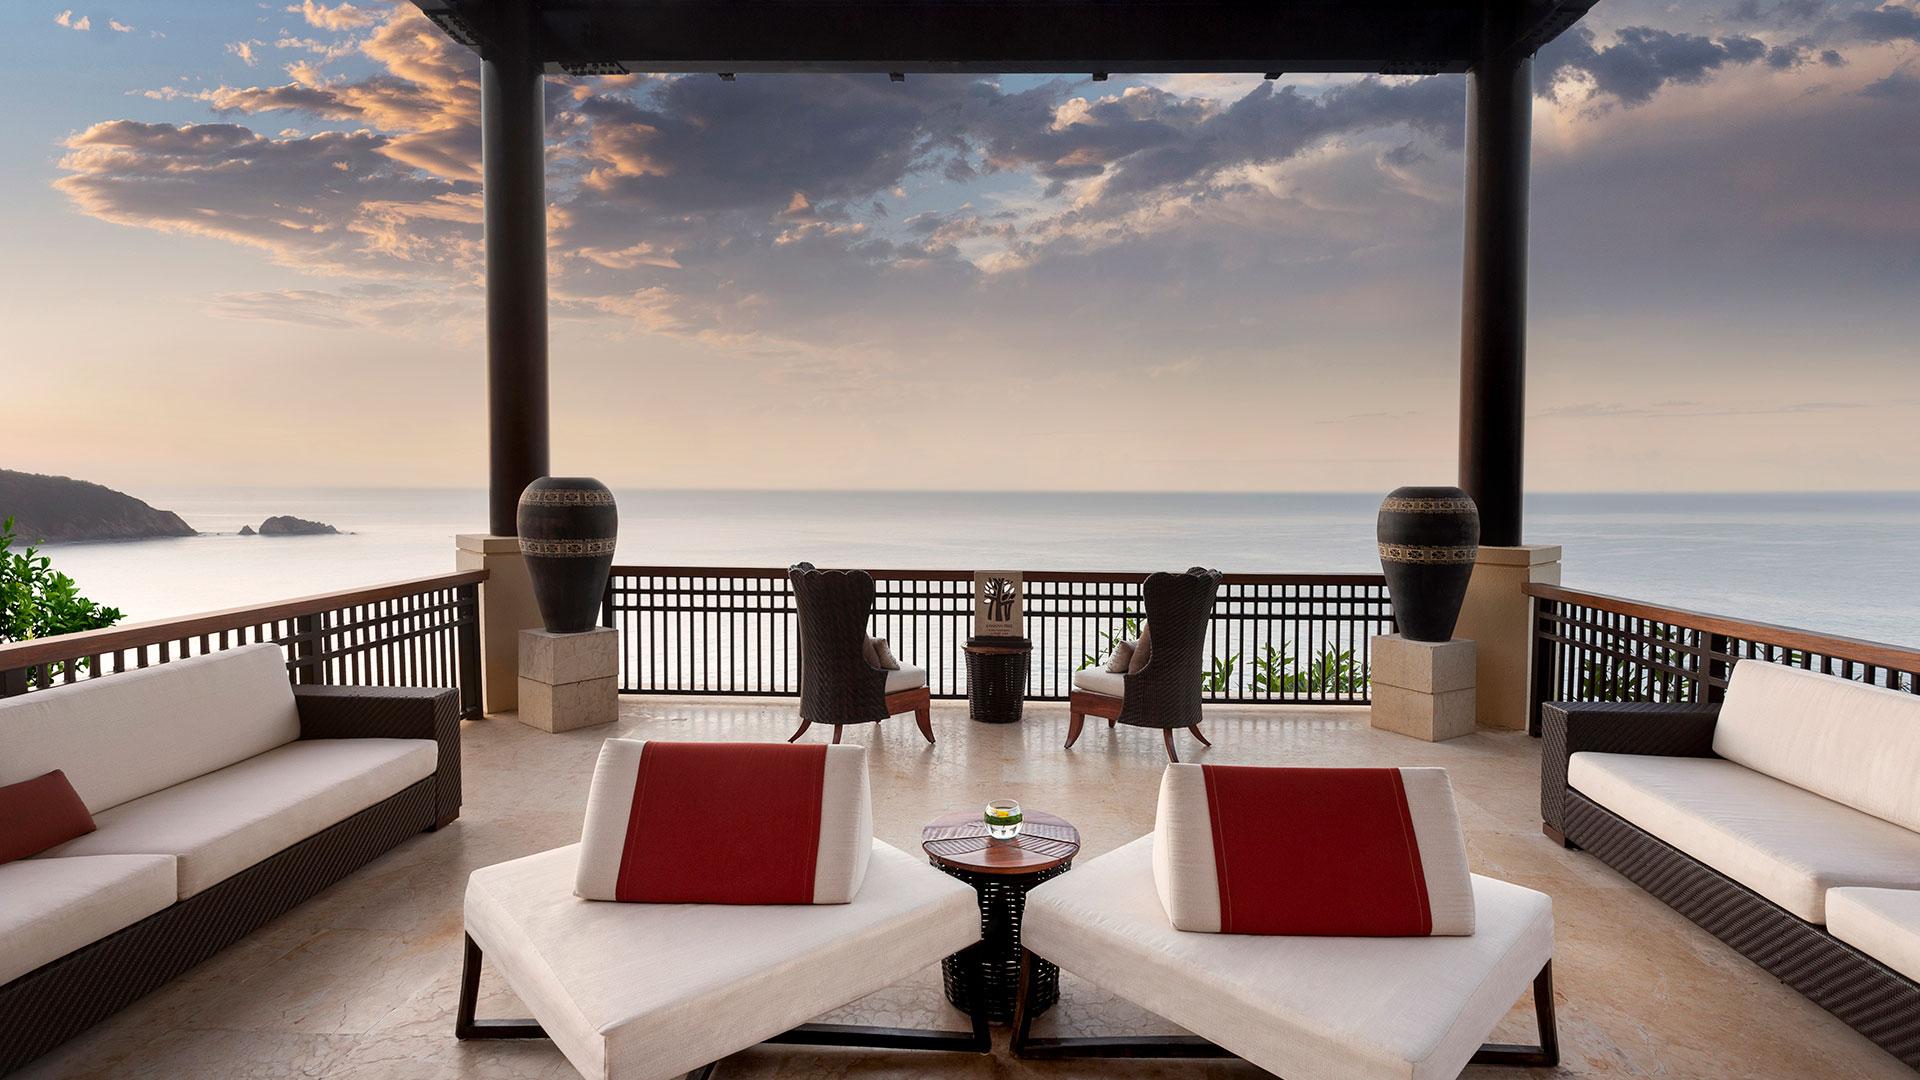 Acapulco Infinity Pool Resort Facilities Banyan Tree